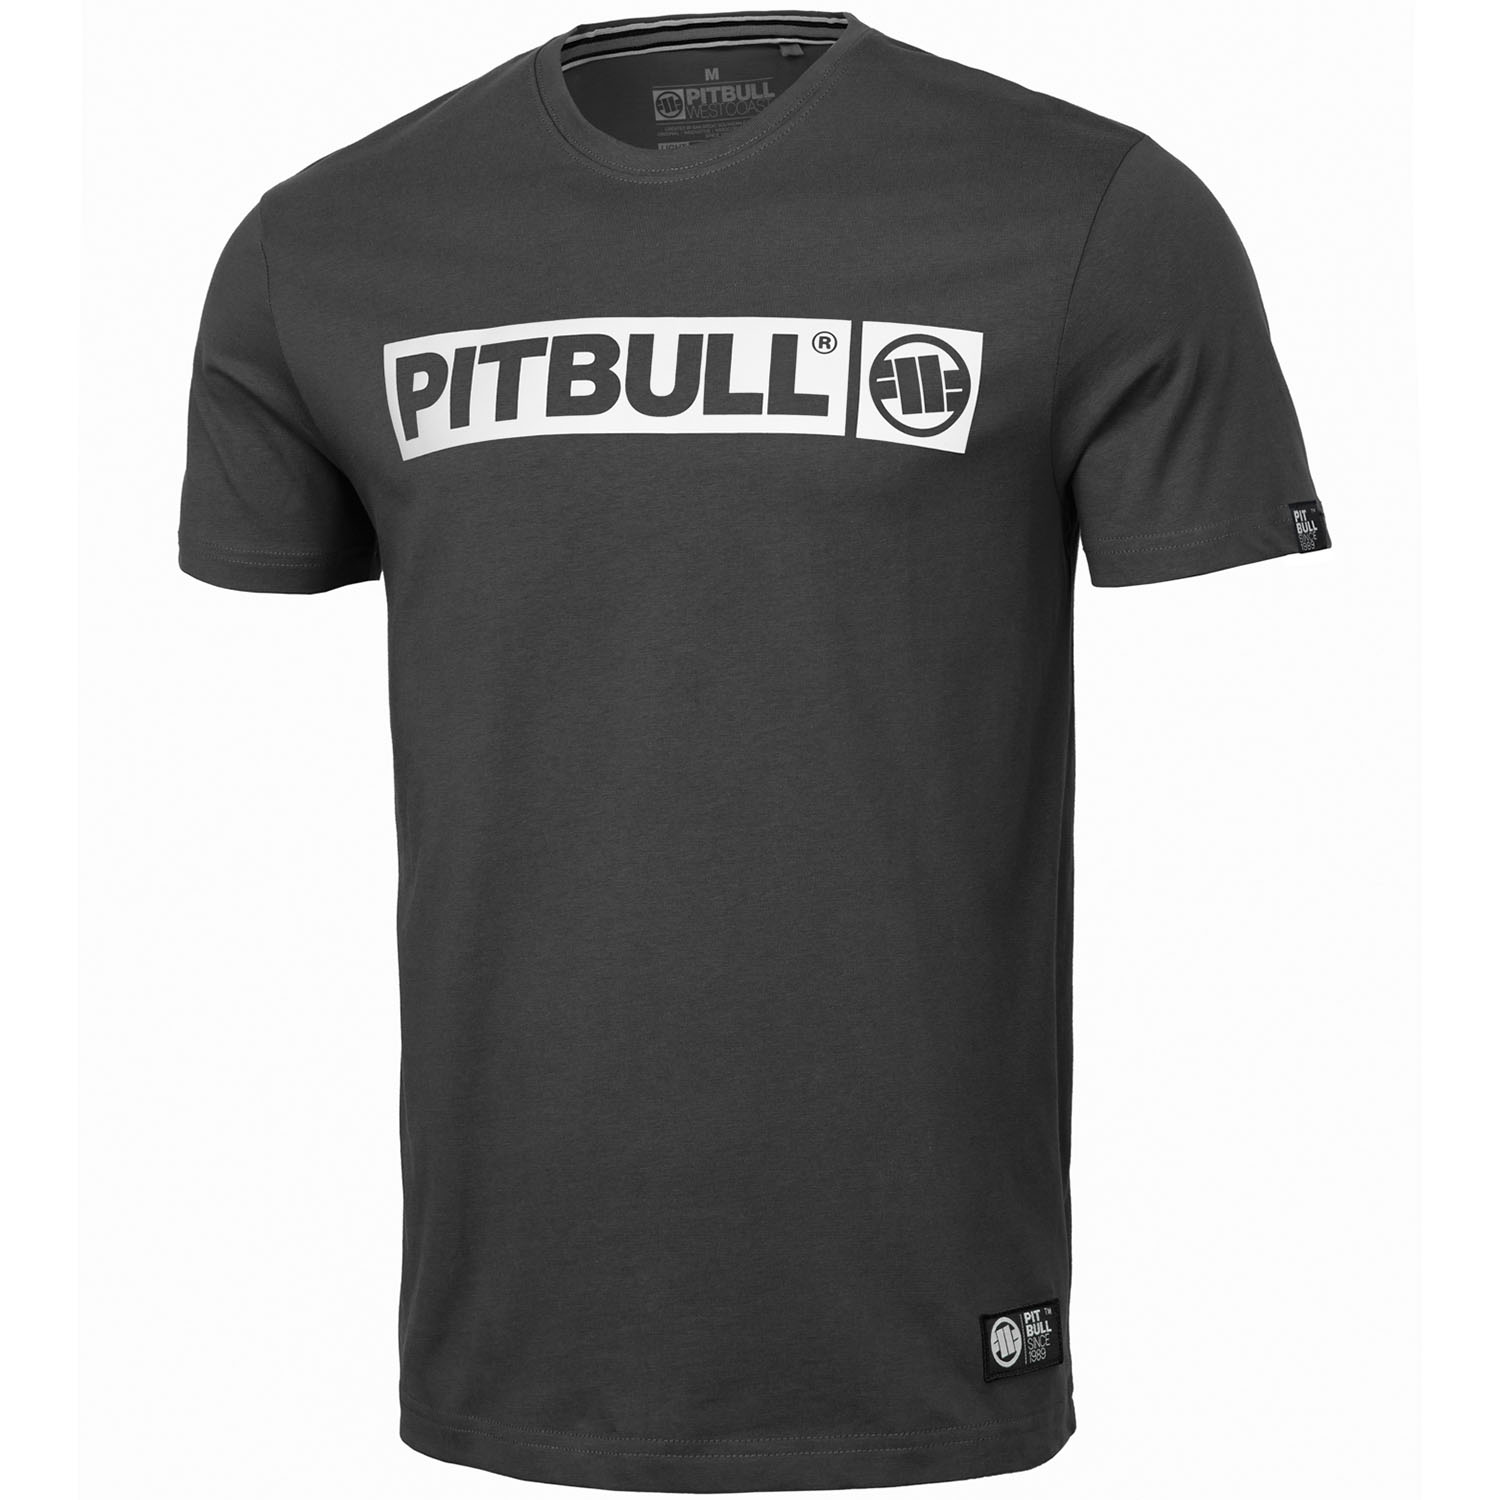 Pit Bull West Coast T-Shirt, Hilltop S70, dunkelgrau